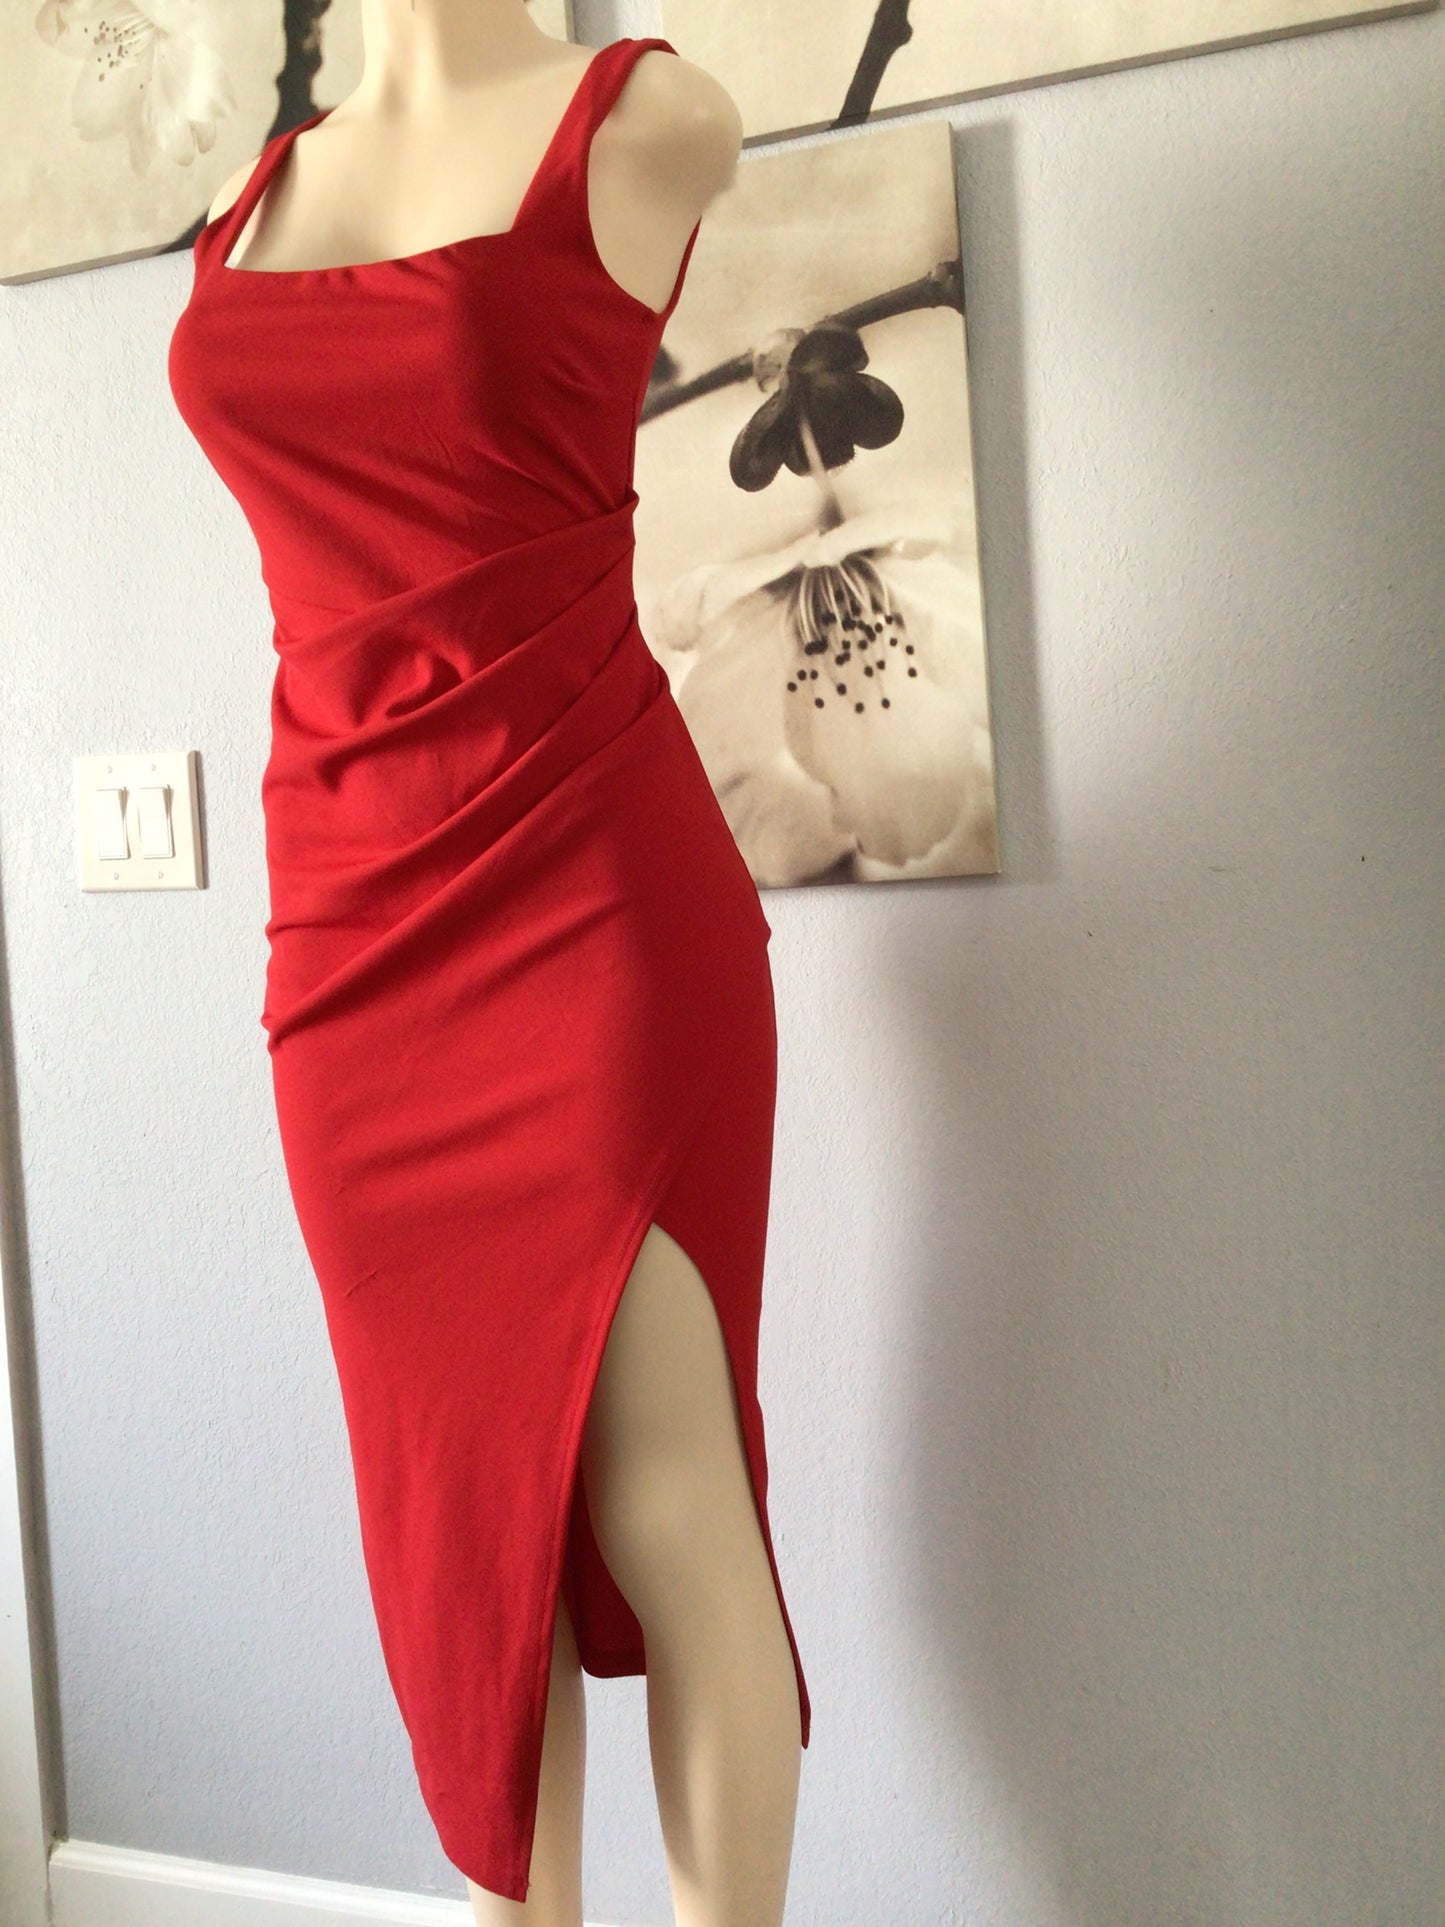 Knitted Women’s Red Dress SZ M